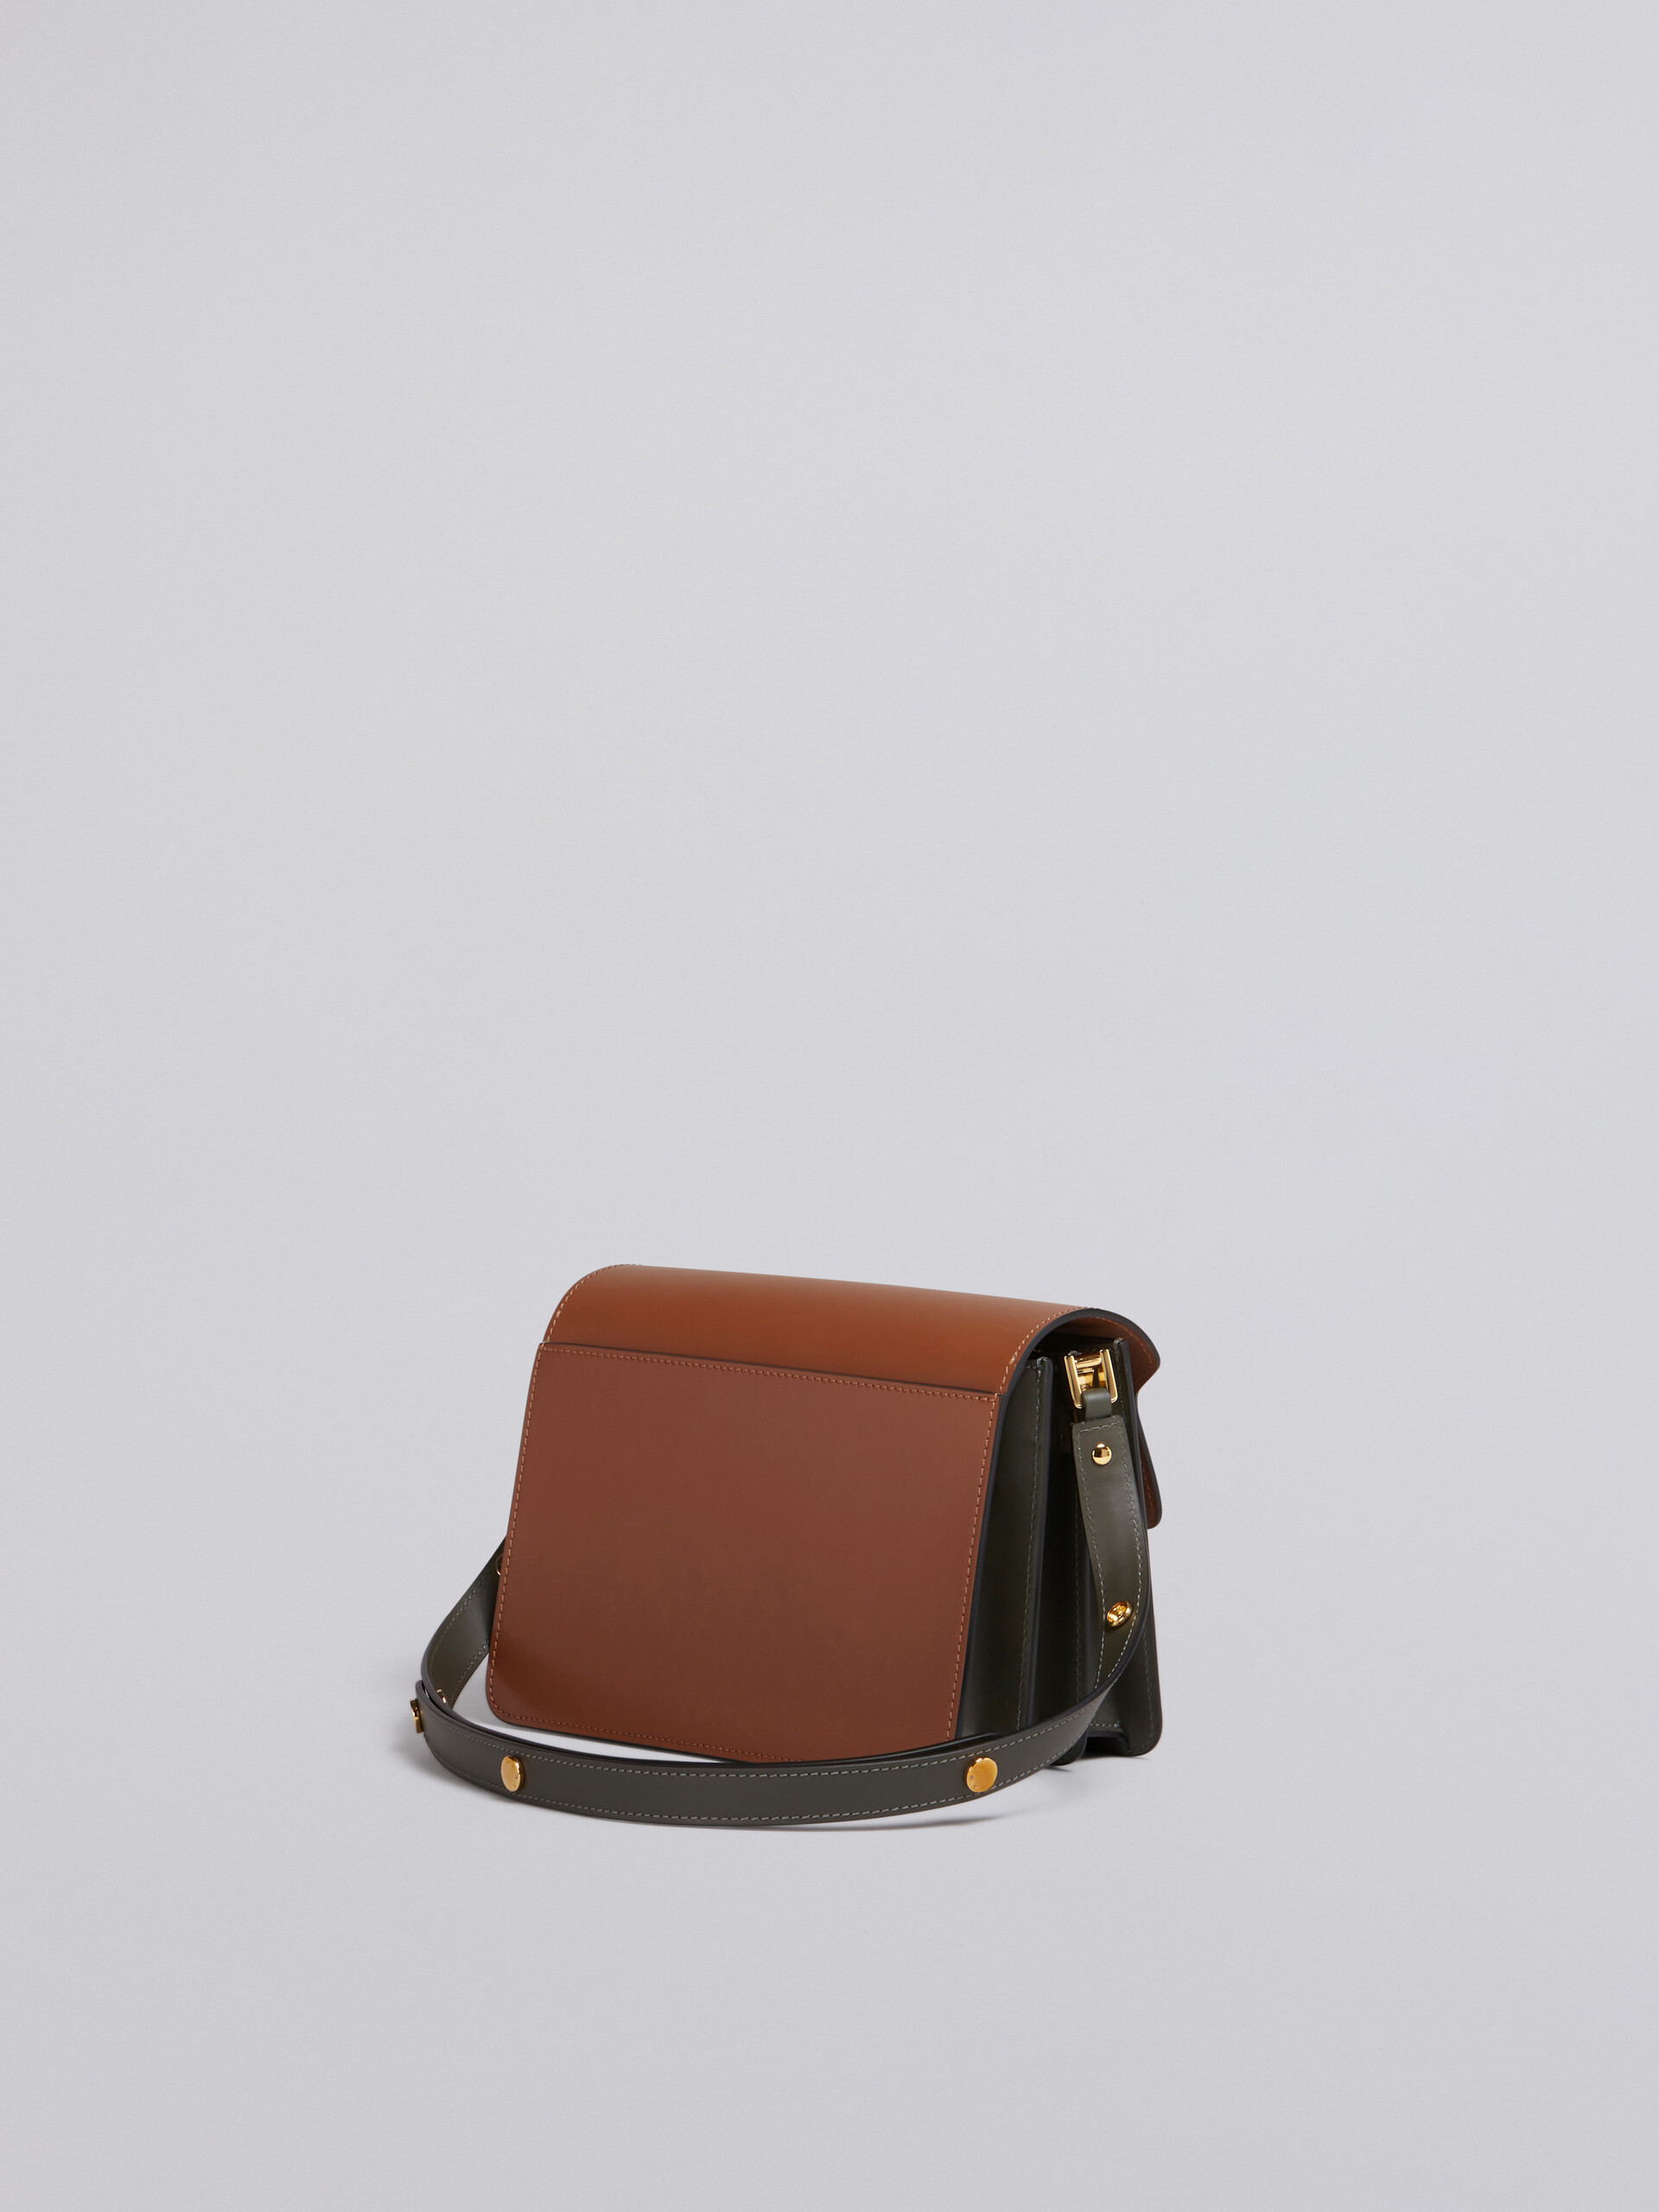 TRUNK media bag in brown white and green leather - Shoulder Bag - Image 2